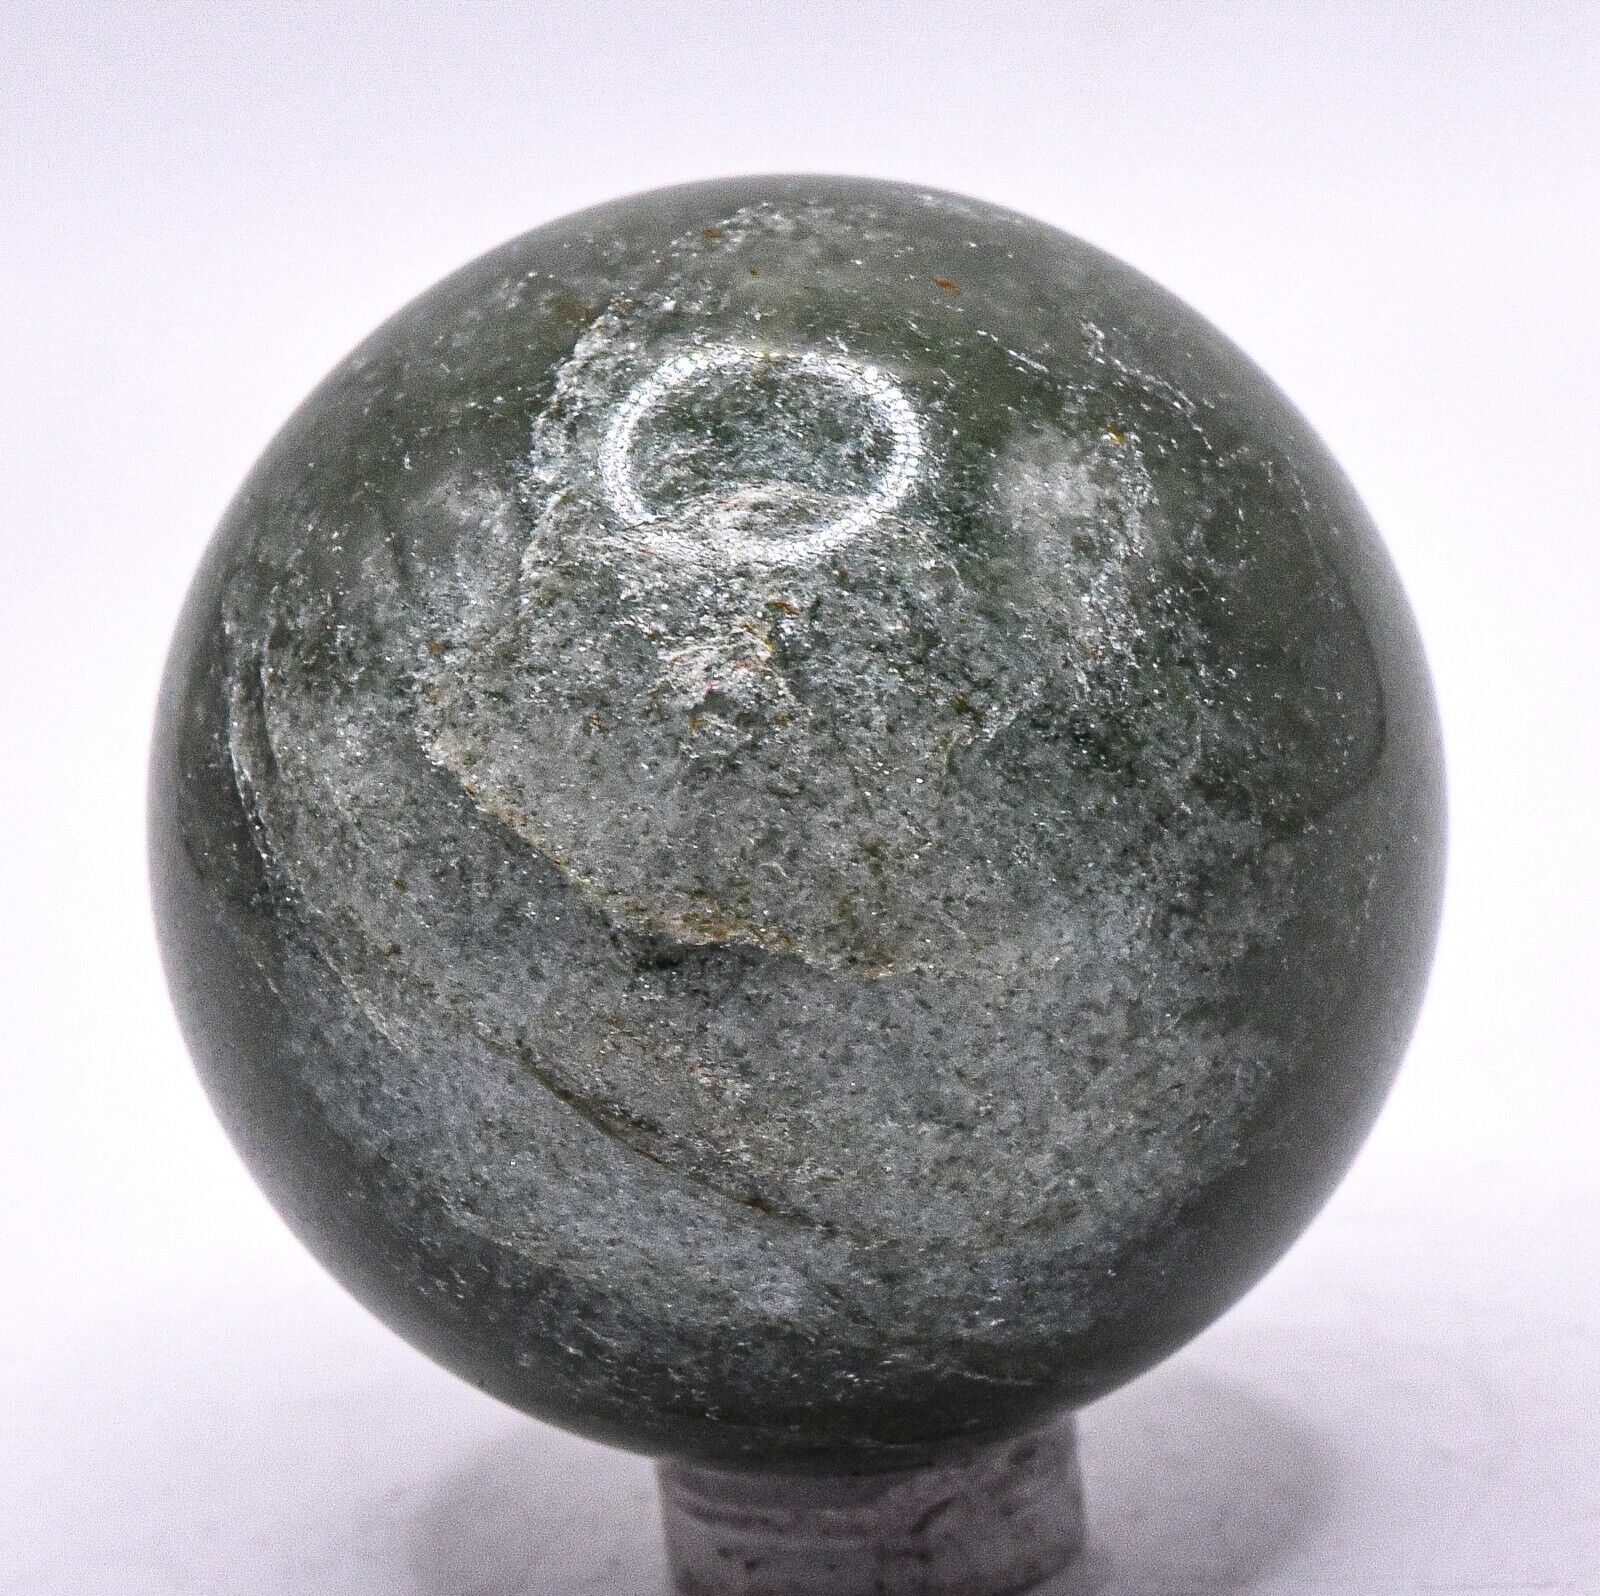 47mm Green Aventurine Quartz Sphere Polished Sparkling Crystal Mineral - India